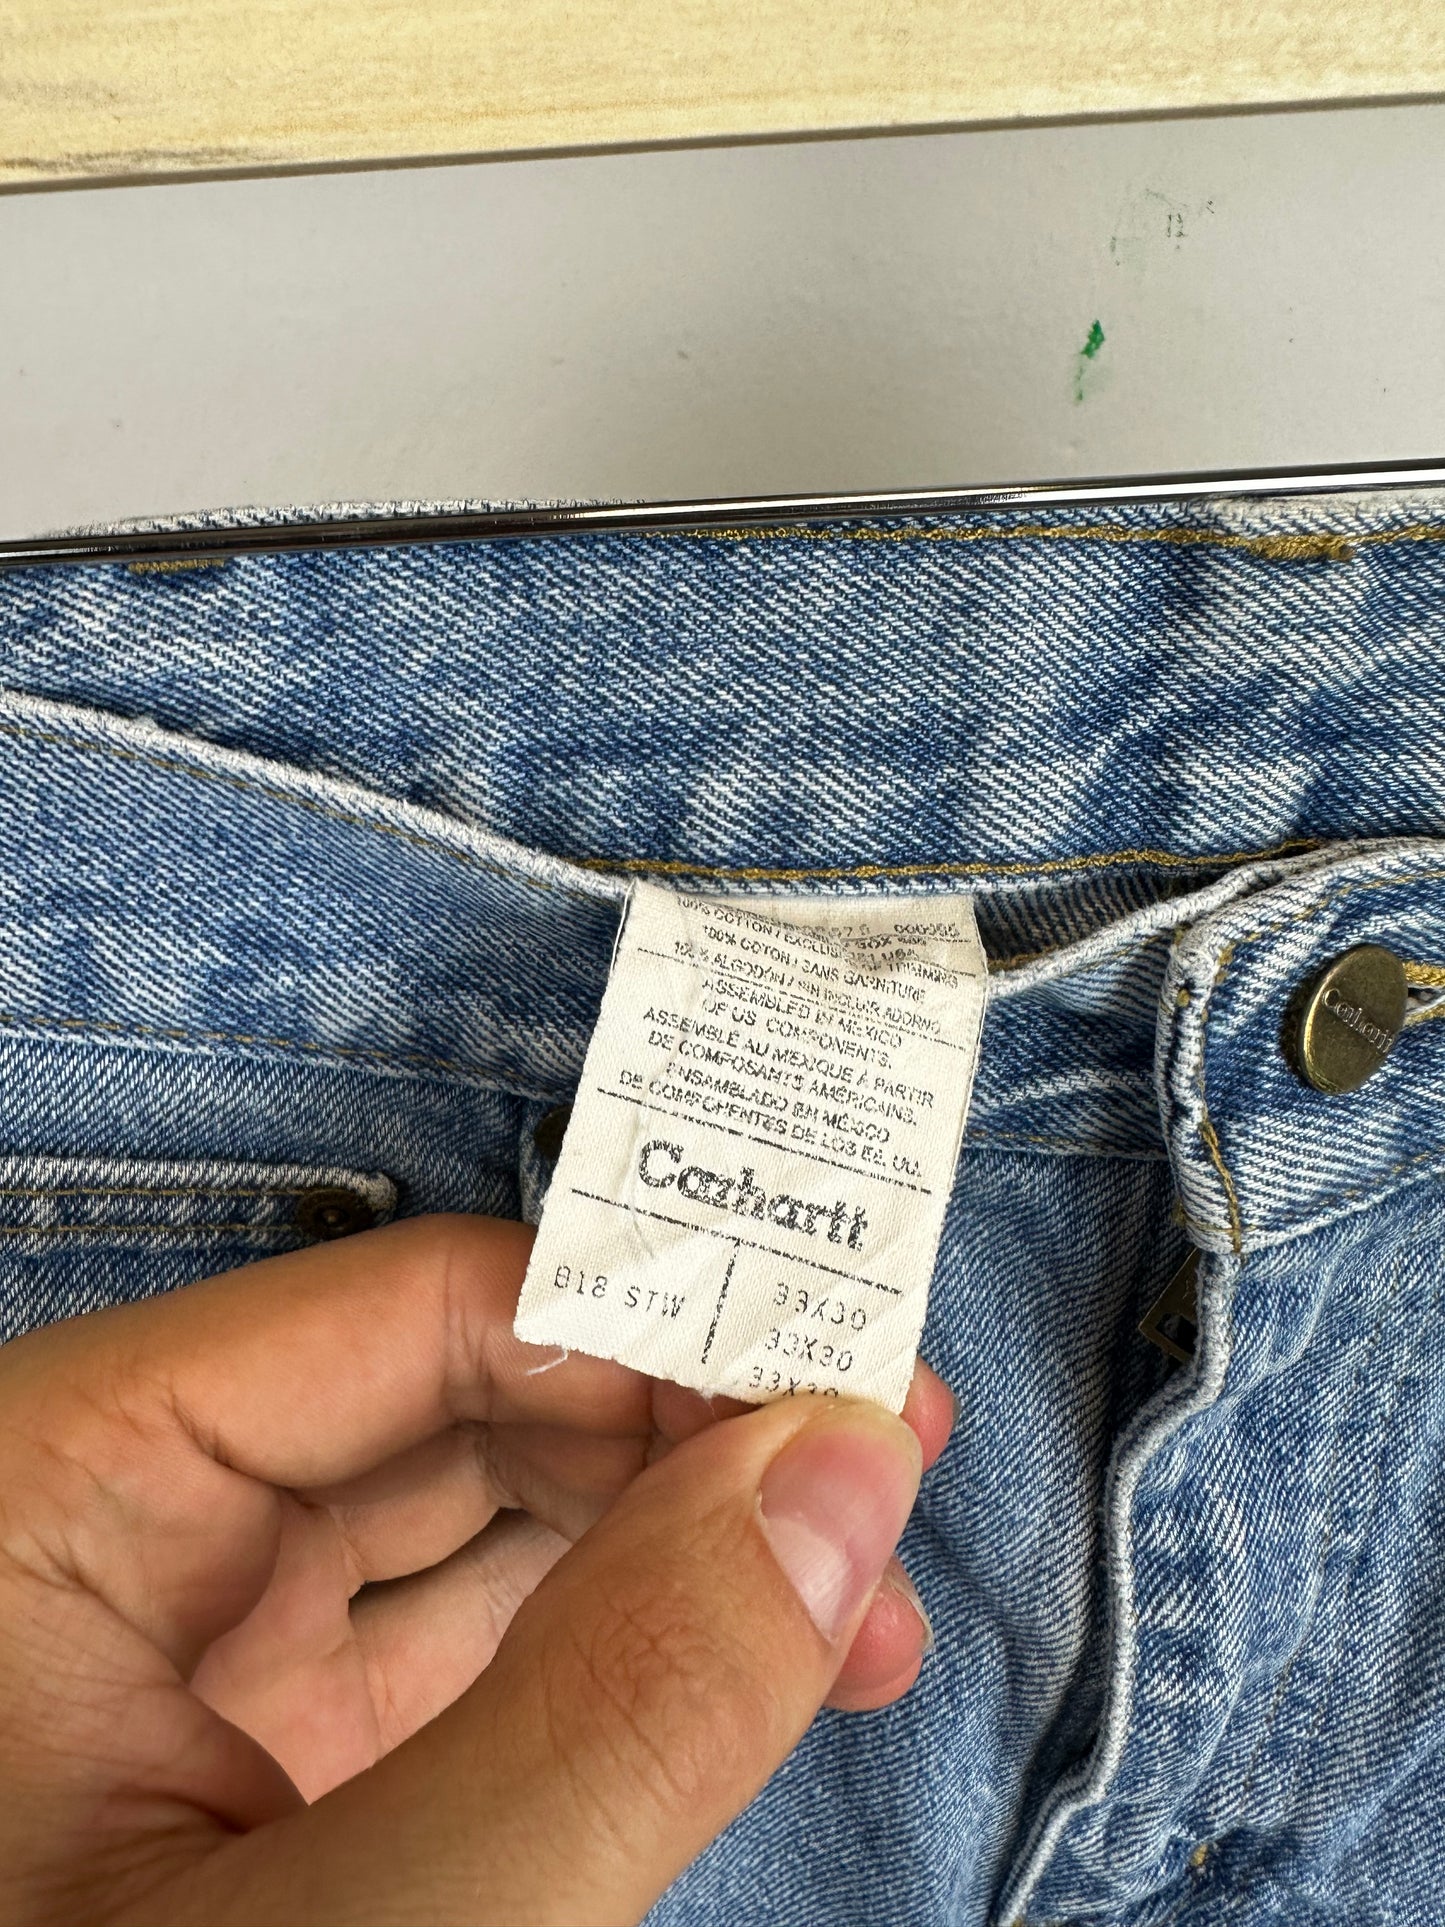 Vintage Carhartt Denim Pants 33x30